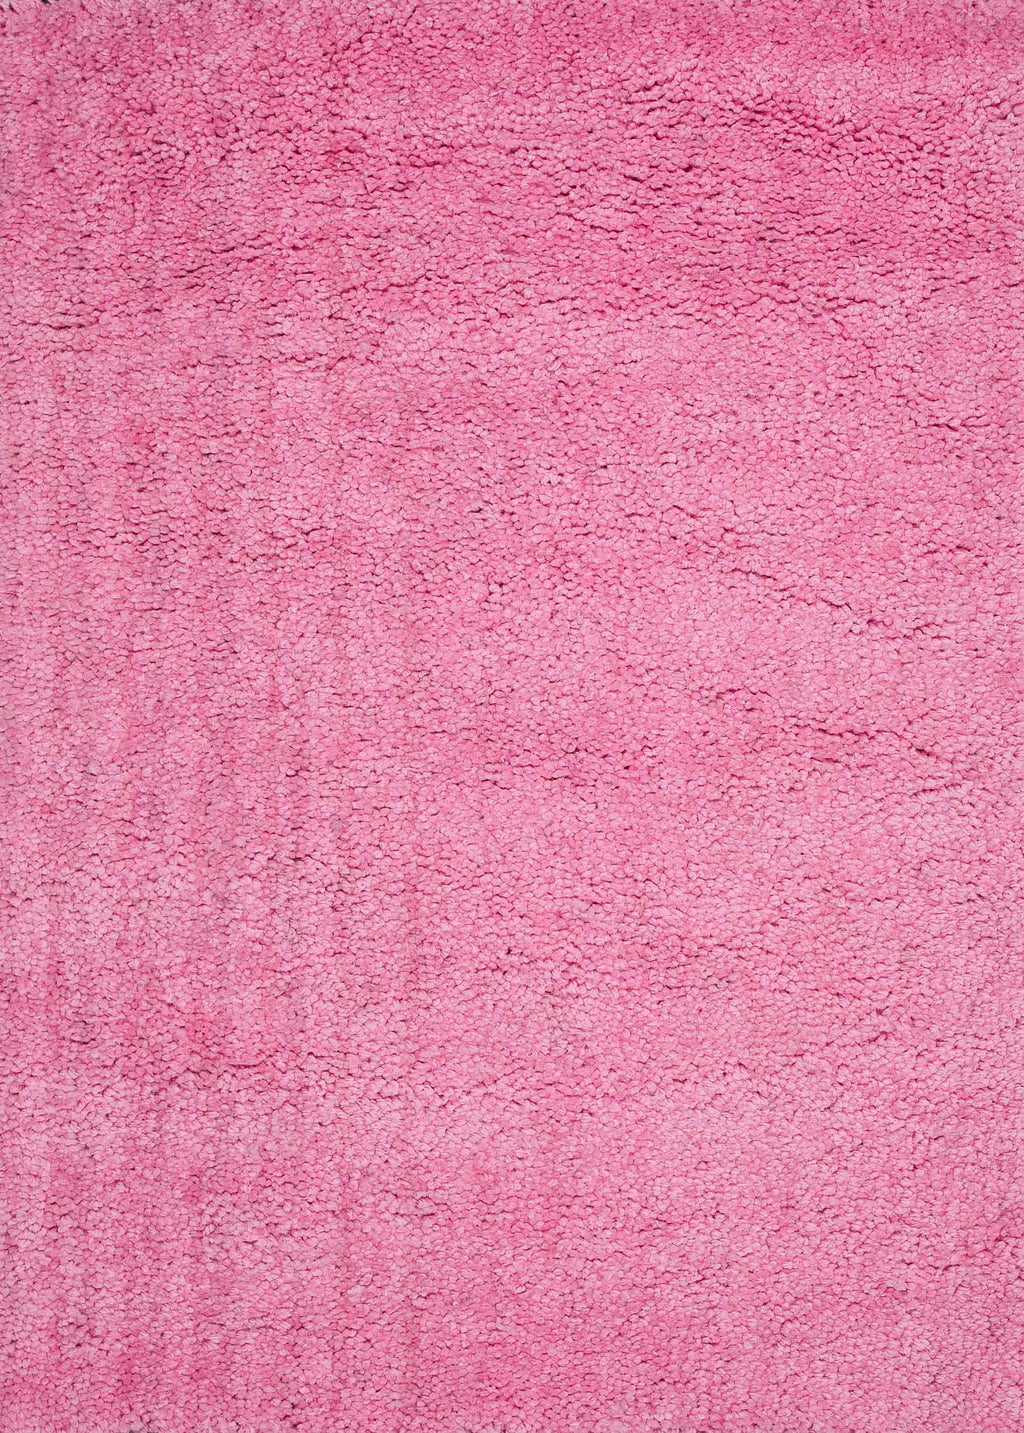 Loloi Hera Shag HG-01 Pink Area Rug main image